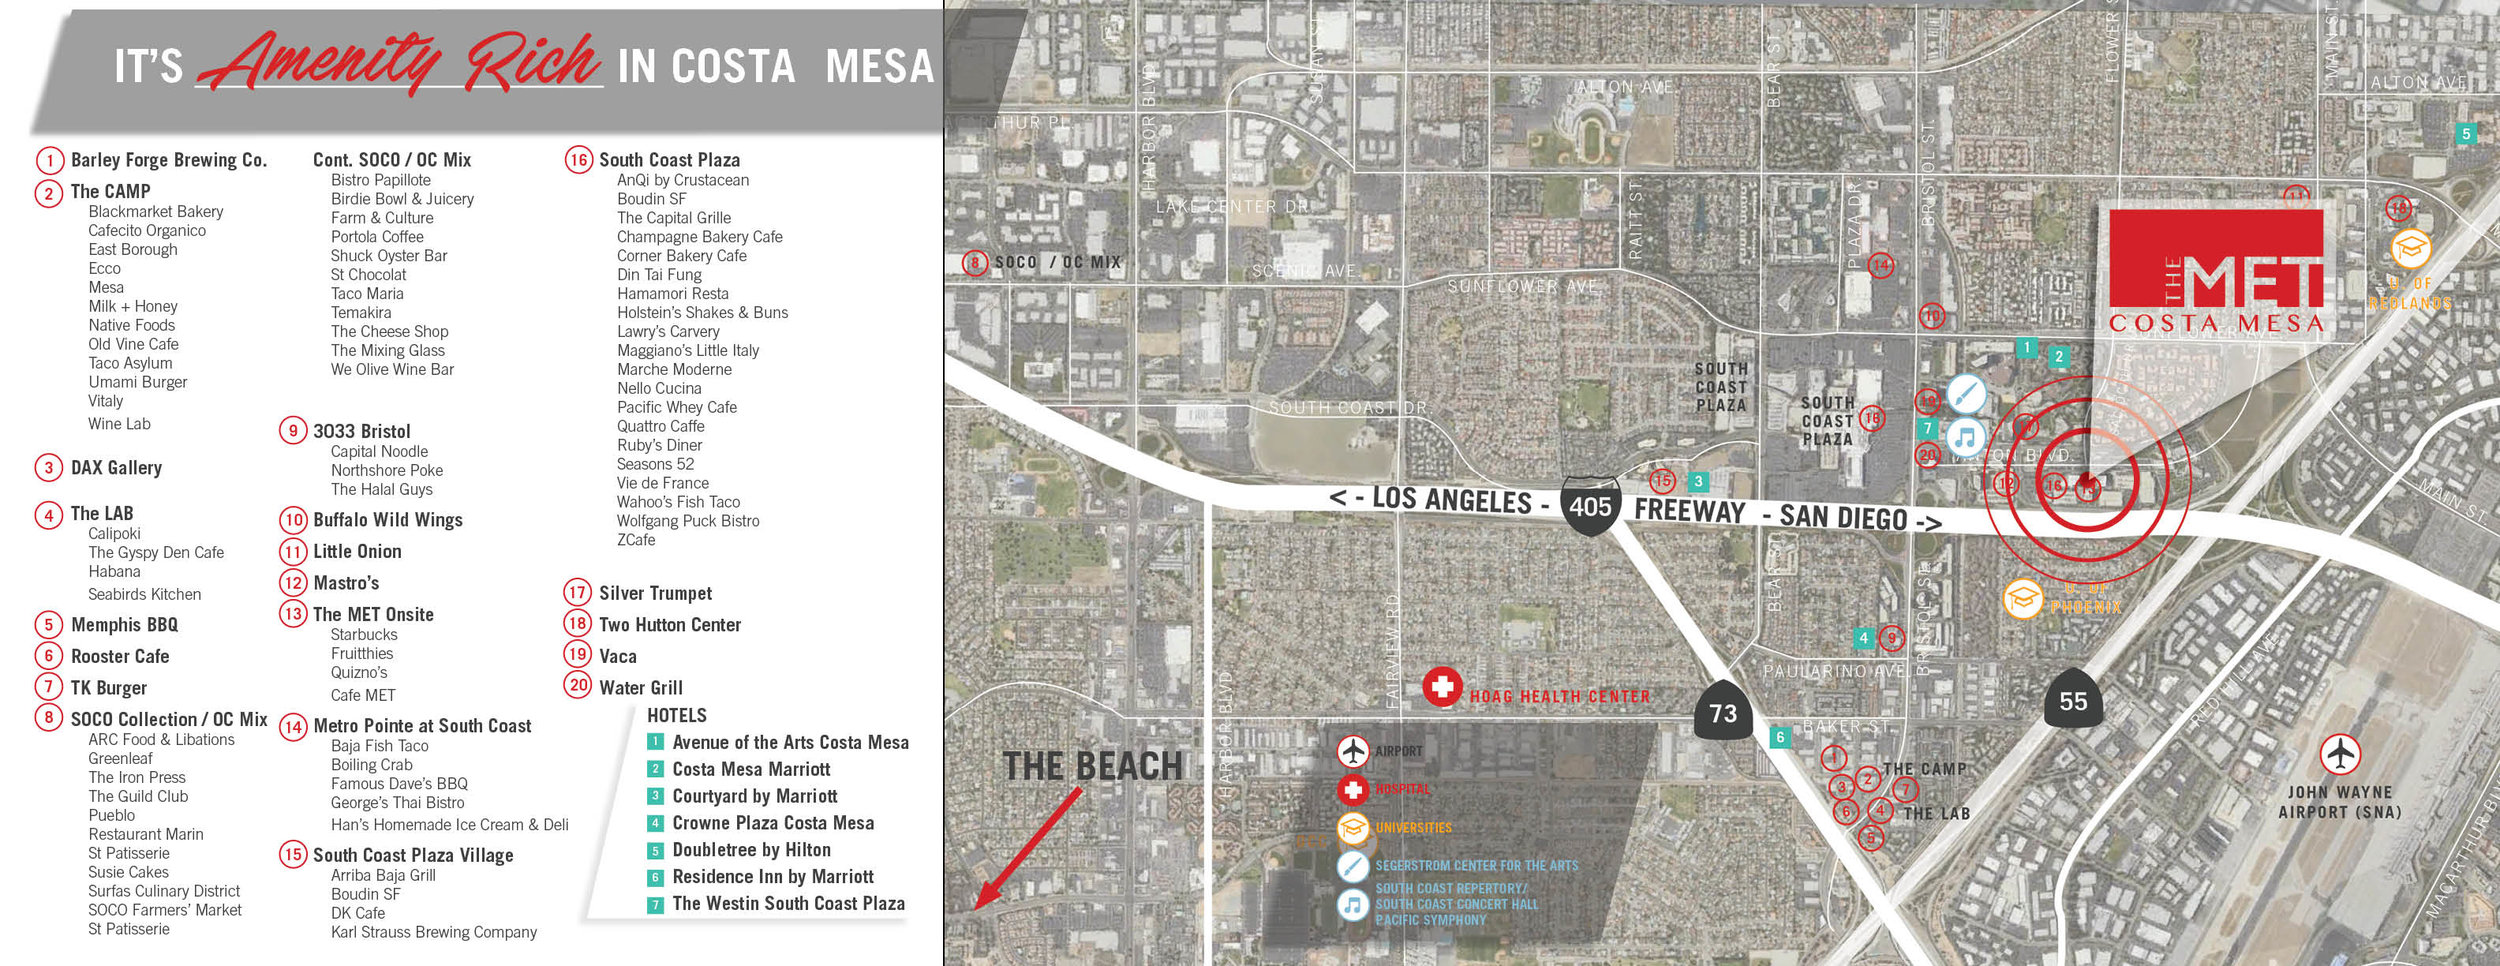 The-MET-Costa-Mesa-12.jpg